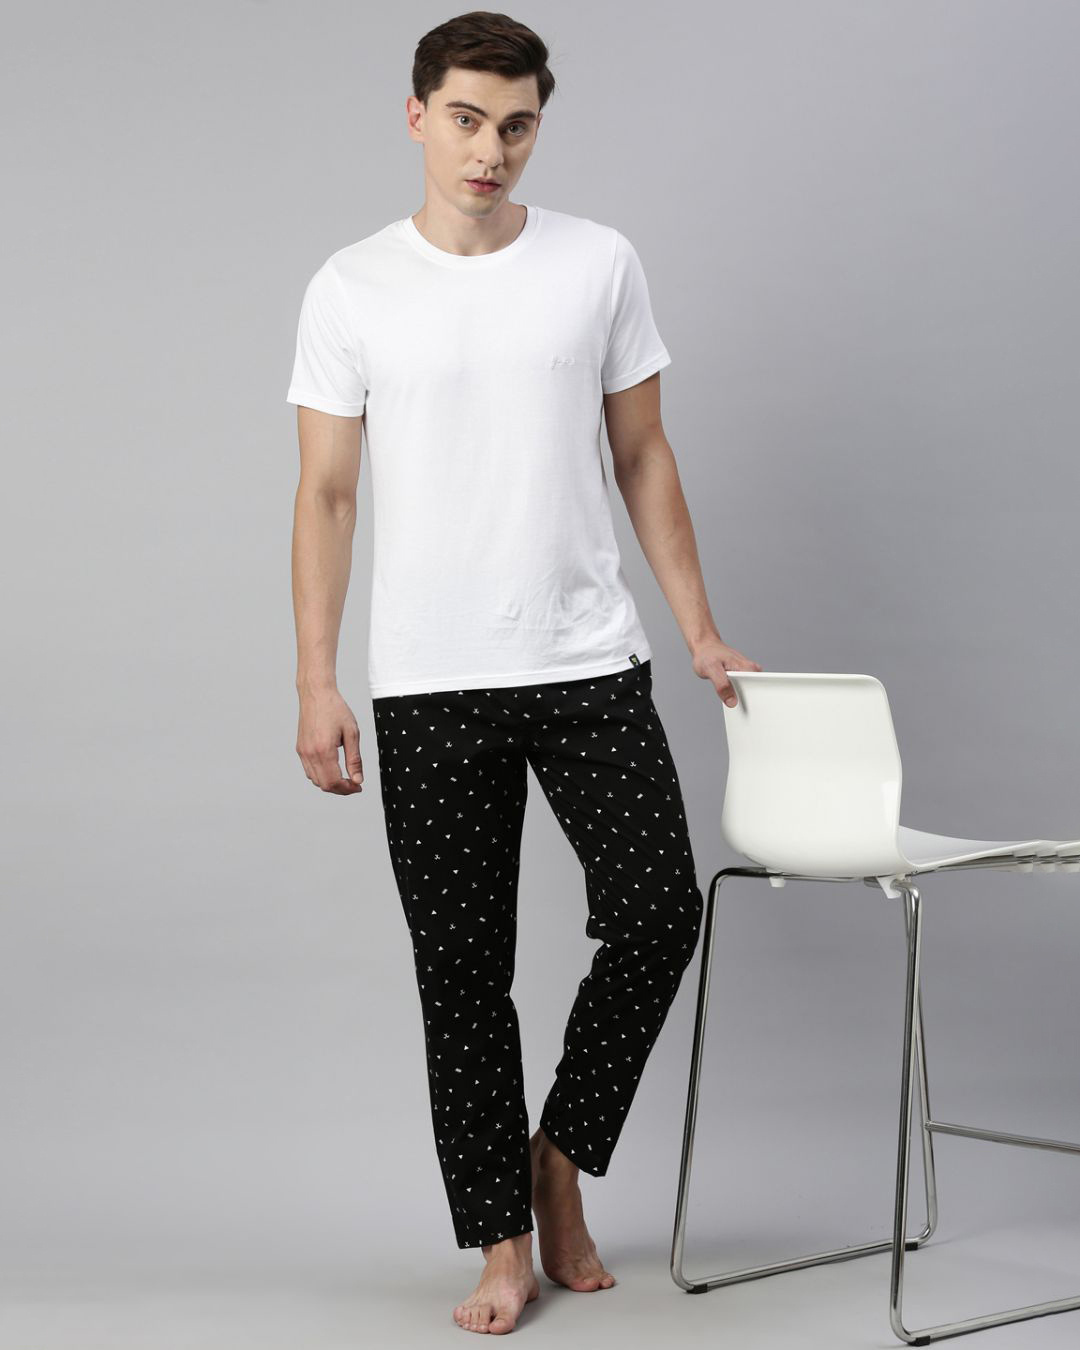 Buy Men's Black All Over Printed Cotton Pyjamas Online in India at Bewakoof